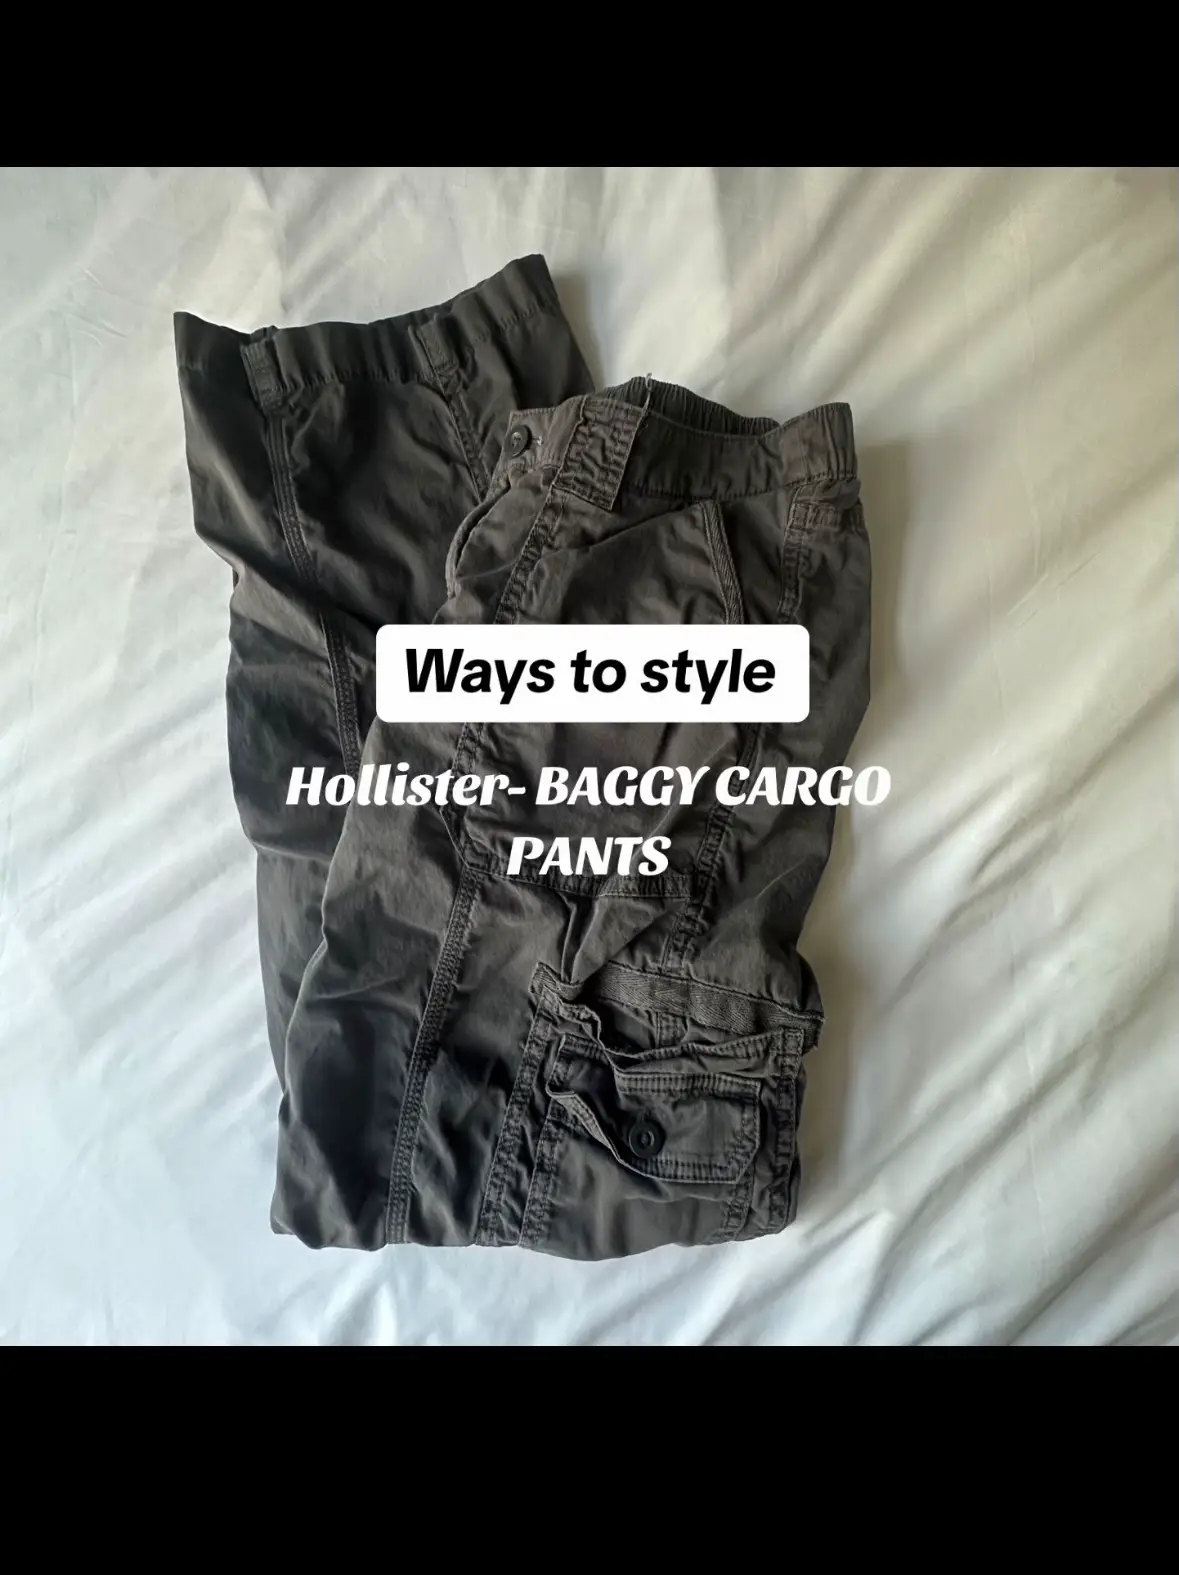 Hollister has the comfiest jeans 🤭 #hollister #hollisterco